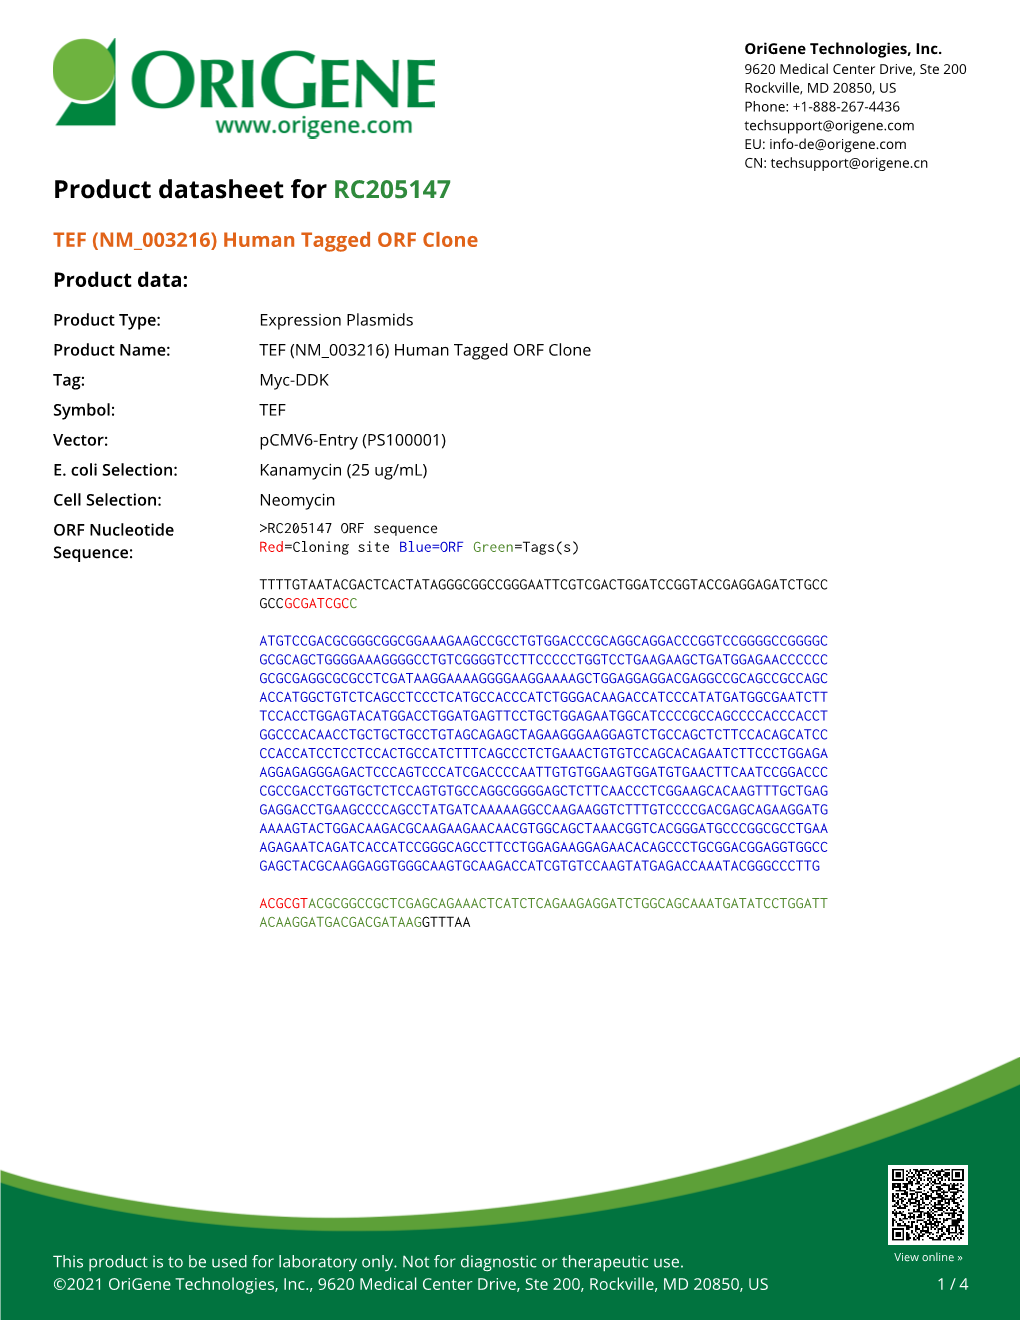 TEF (NM 003216) Human Tagged ORF Clone – RC205147 | Origene